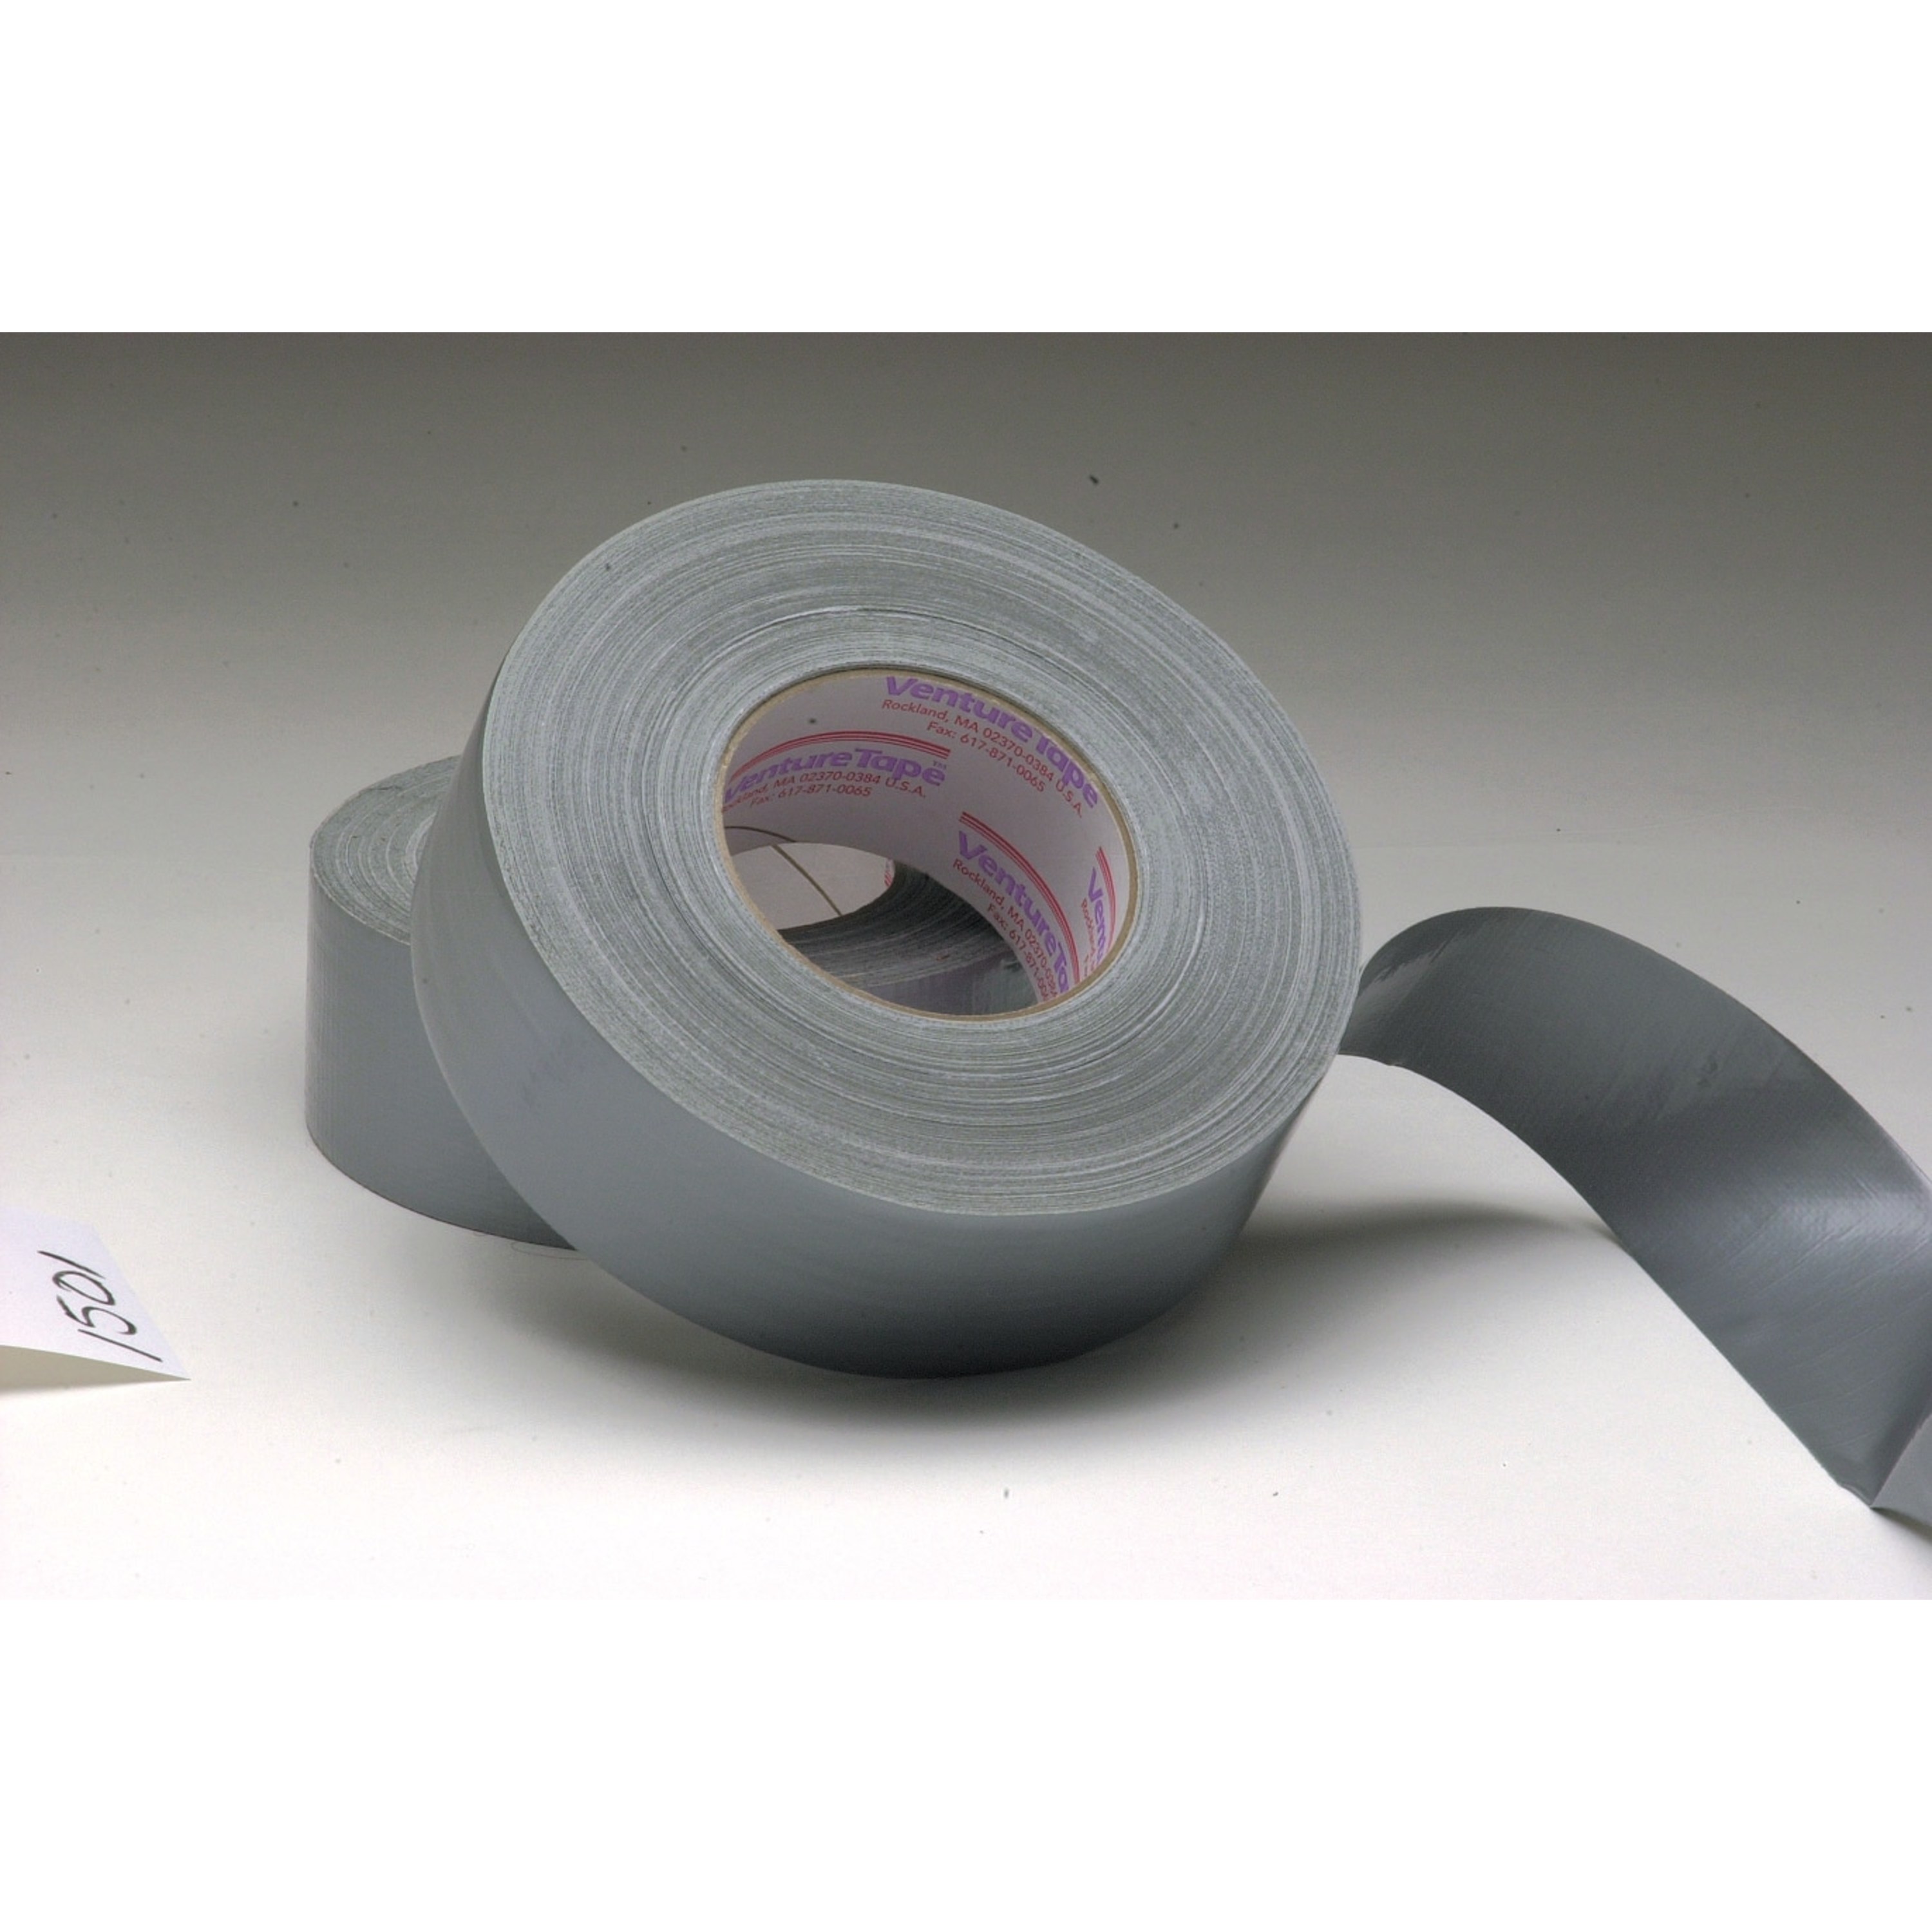 3M™ Venture Tape™ All Purpose Duct Tape 1501, Gray, 48 mm x 5 5m (1.88
in x 60.1 yd), 24 per case